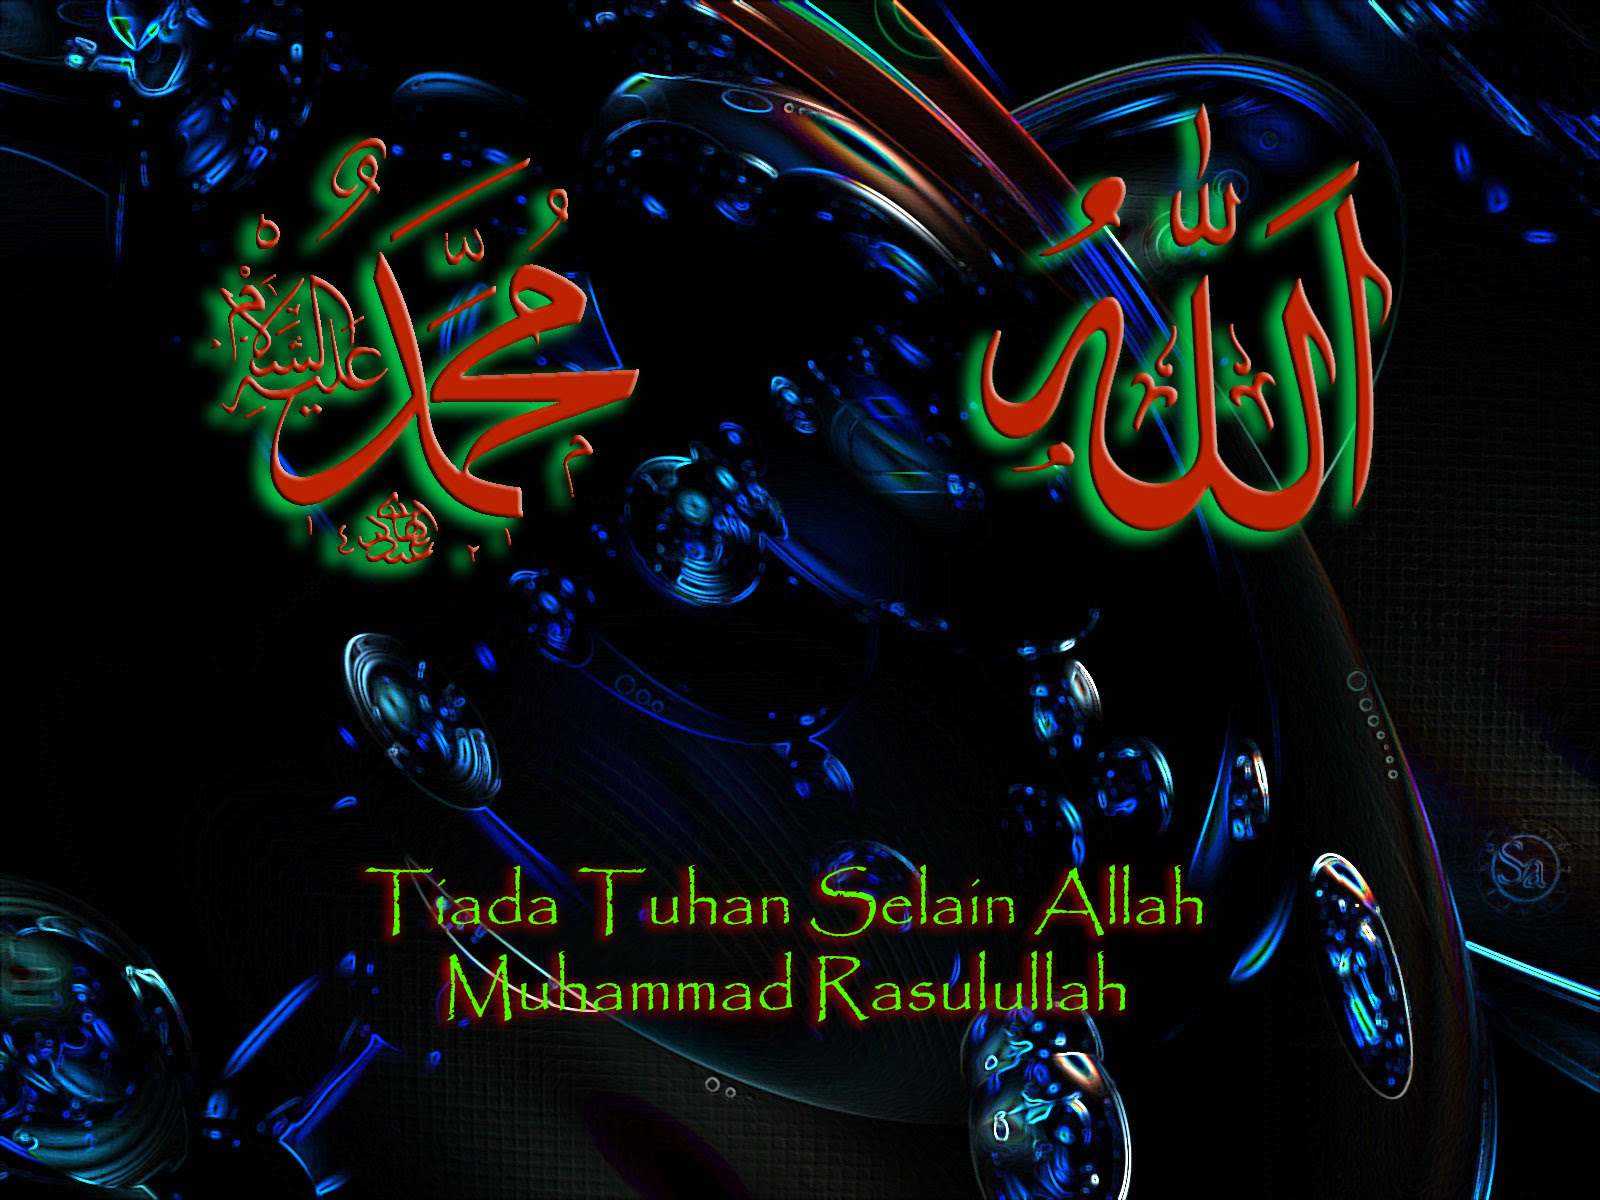 Download Wallpaper Kaligrafi Islam Bergerak Cikimmcom